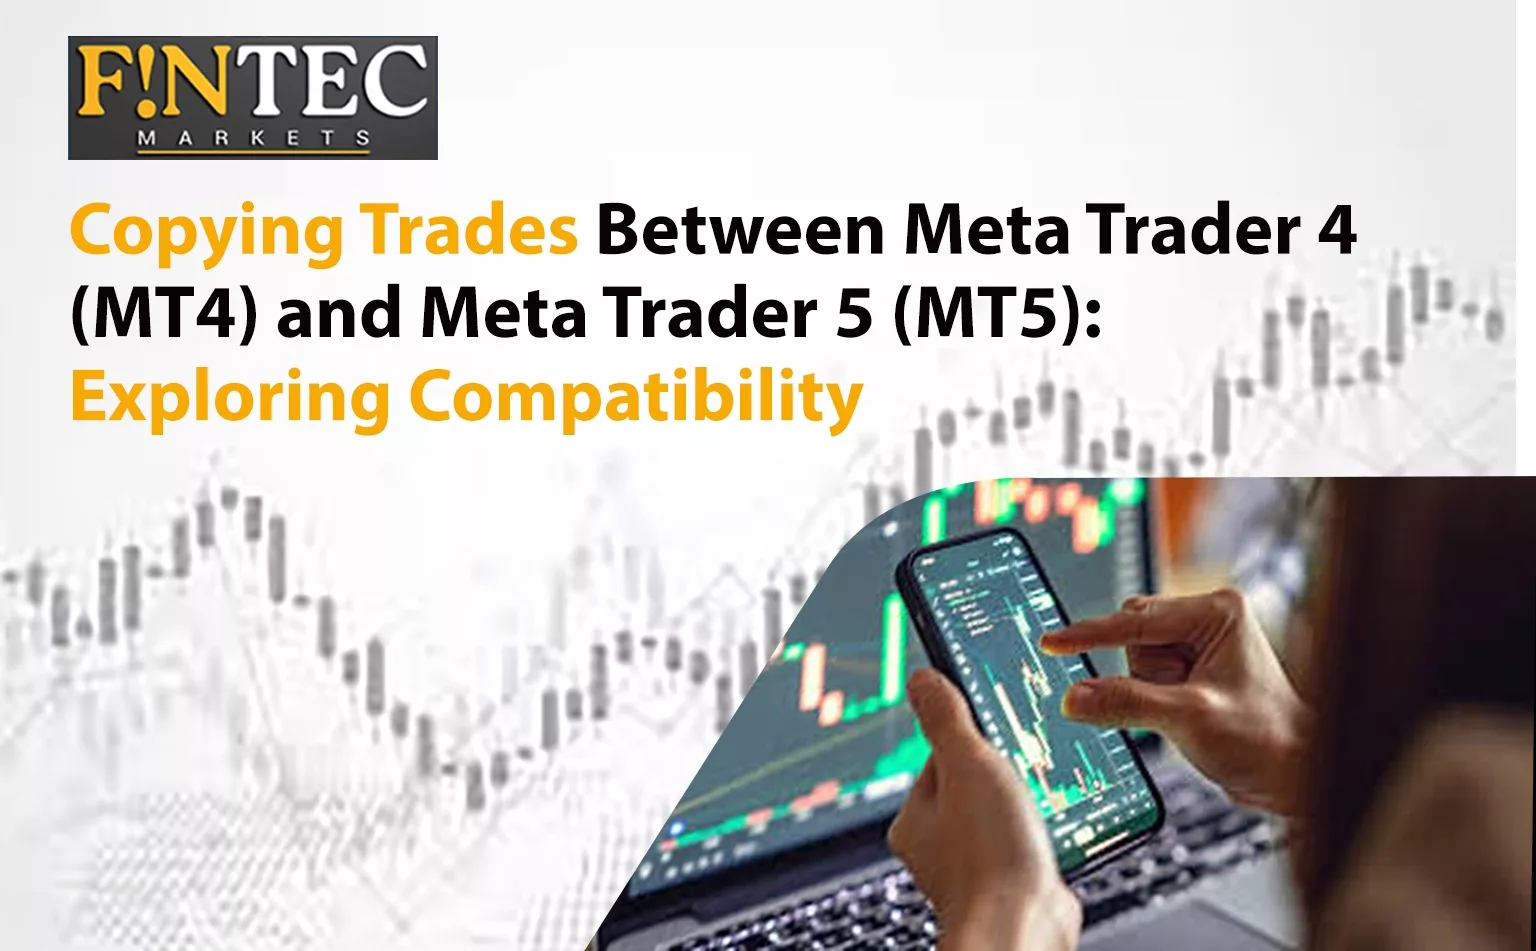 Exploring Copy Trading on MetaTrader 4 (MT4)